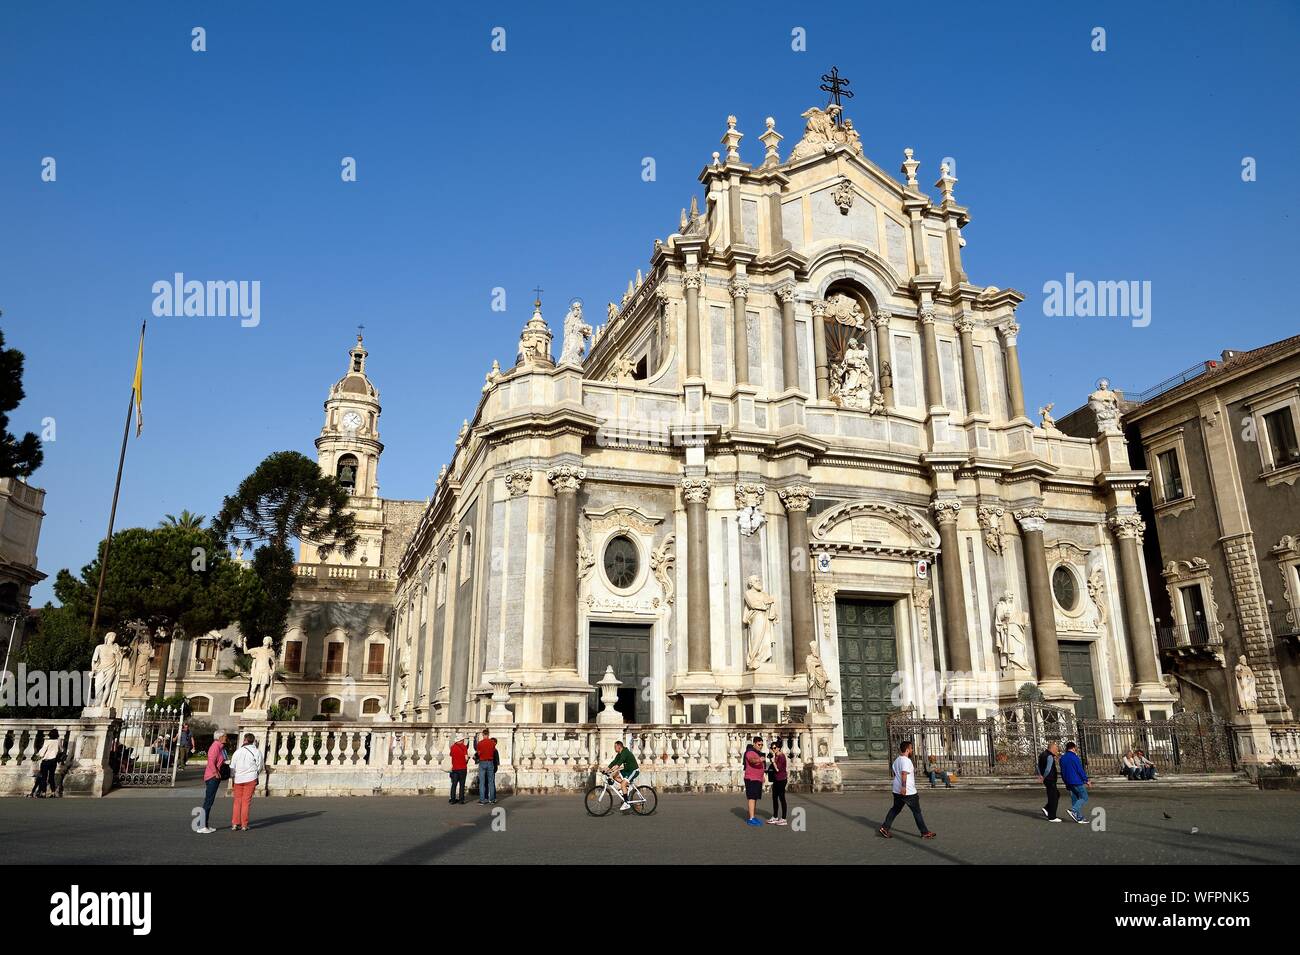 Italia, Sicilia, Catania, ciudad barroca, catalogado como Patrimonio Mundial de la UNESCO, la Piazza del Duomo, el Duomo di Sant 'Agata (St. Agatha Catedral). Foto de stock